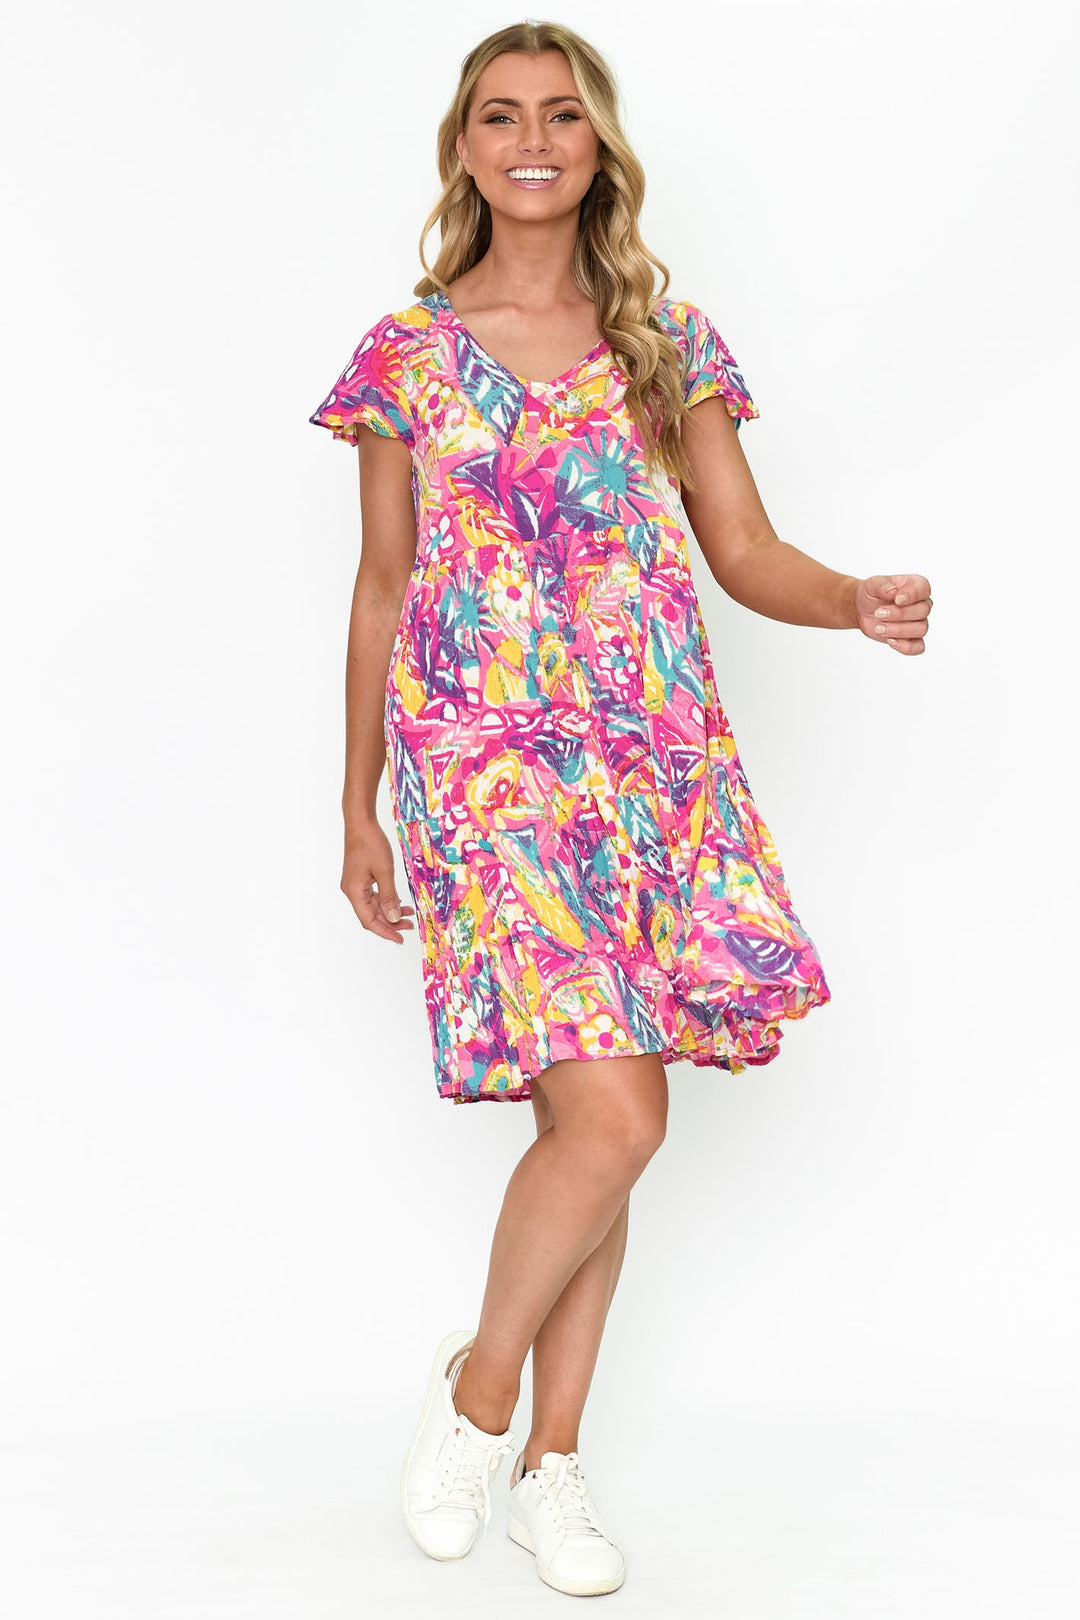 One Summer Kimberly V-Neck Dress DW71F Print 10 Pink Short Sleeve - Dotique